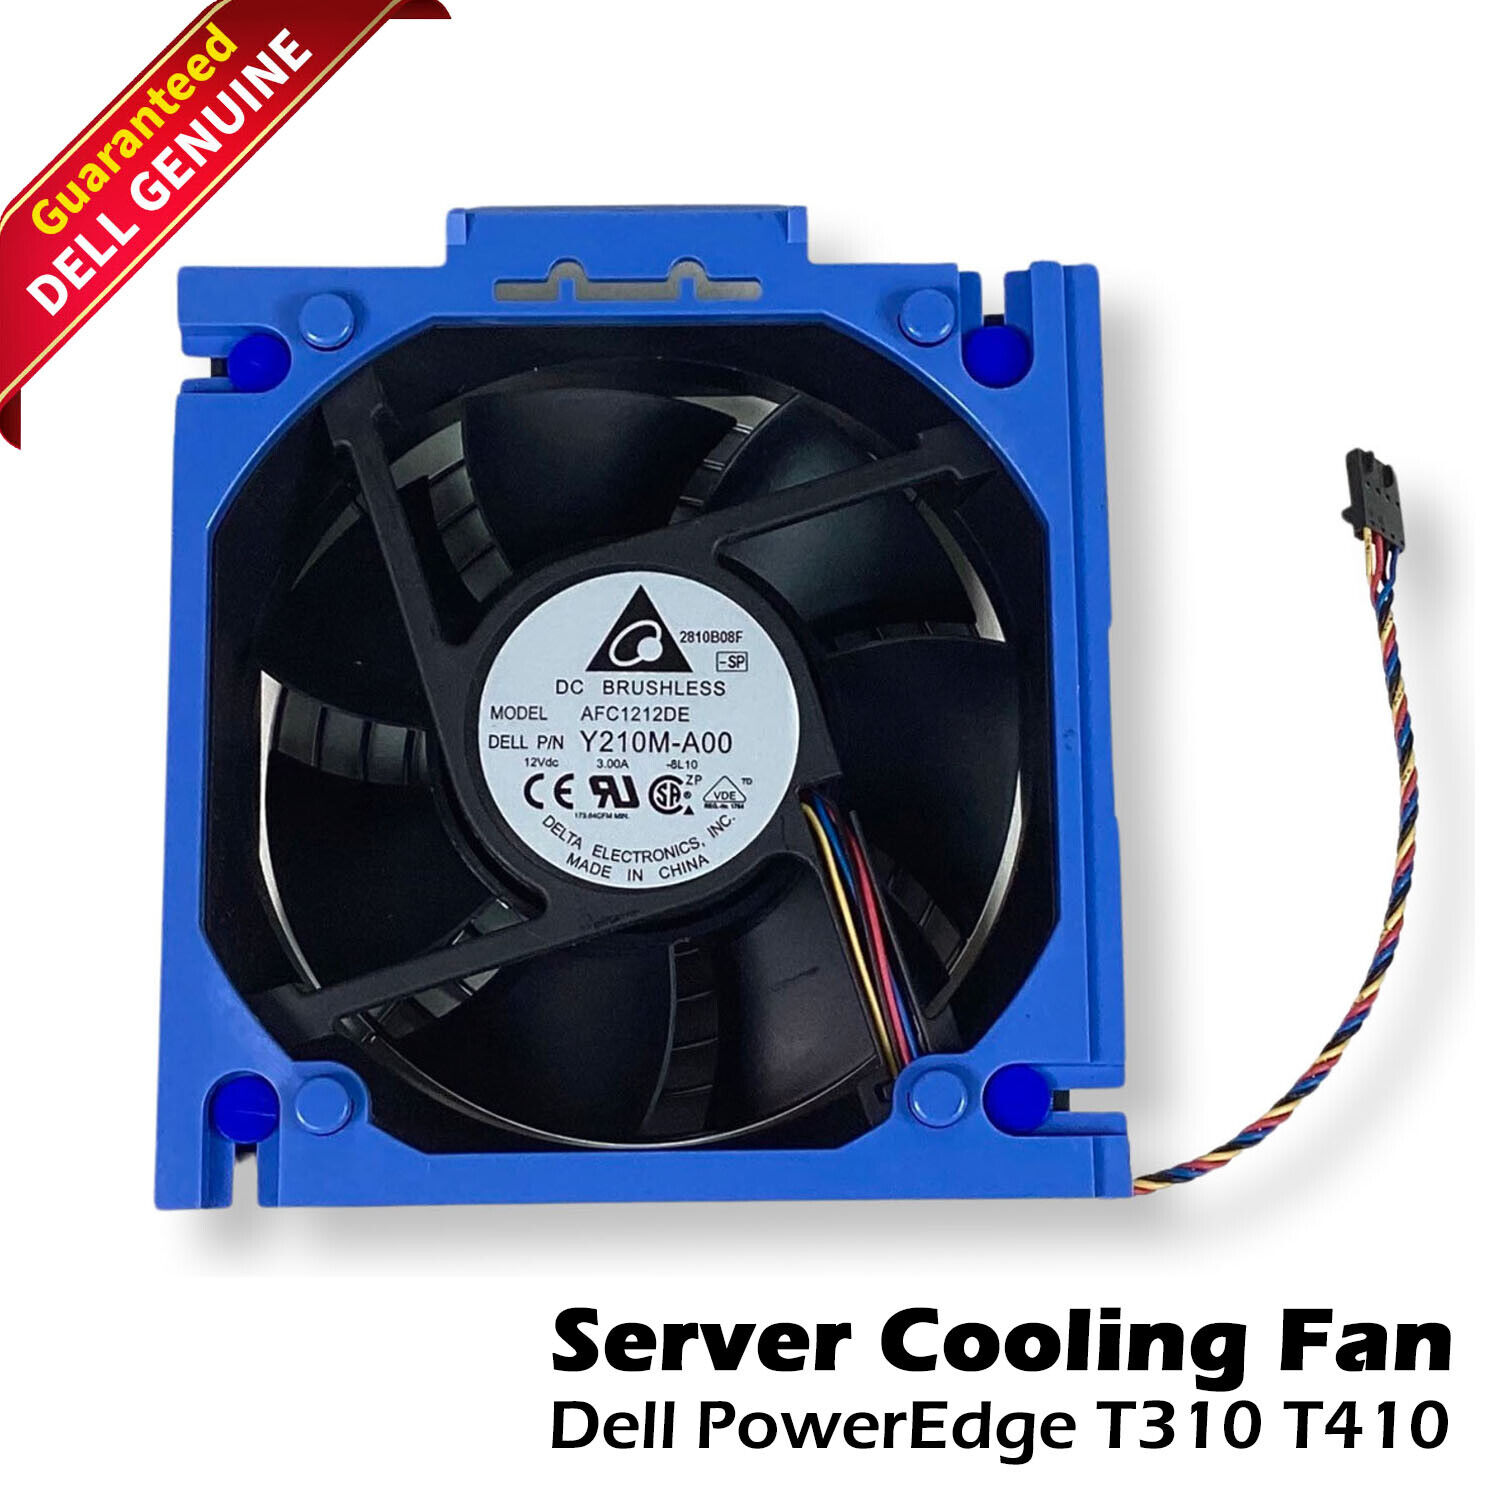 Dell Y210M PowerEdge T310 T410 Server Cooling Fan Assembly w/ Mount R150M D380M